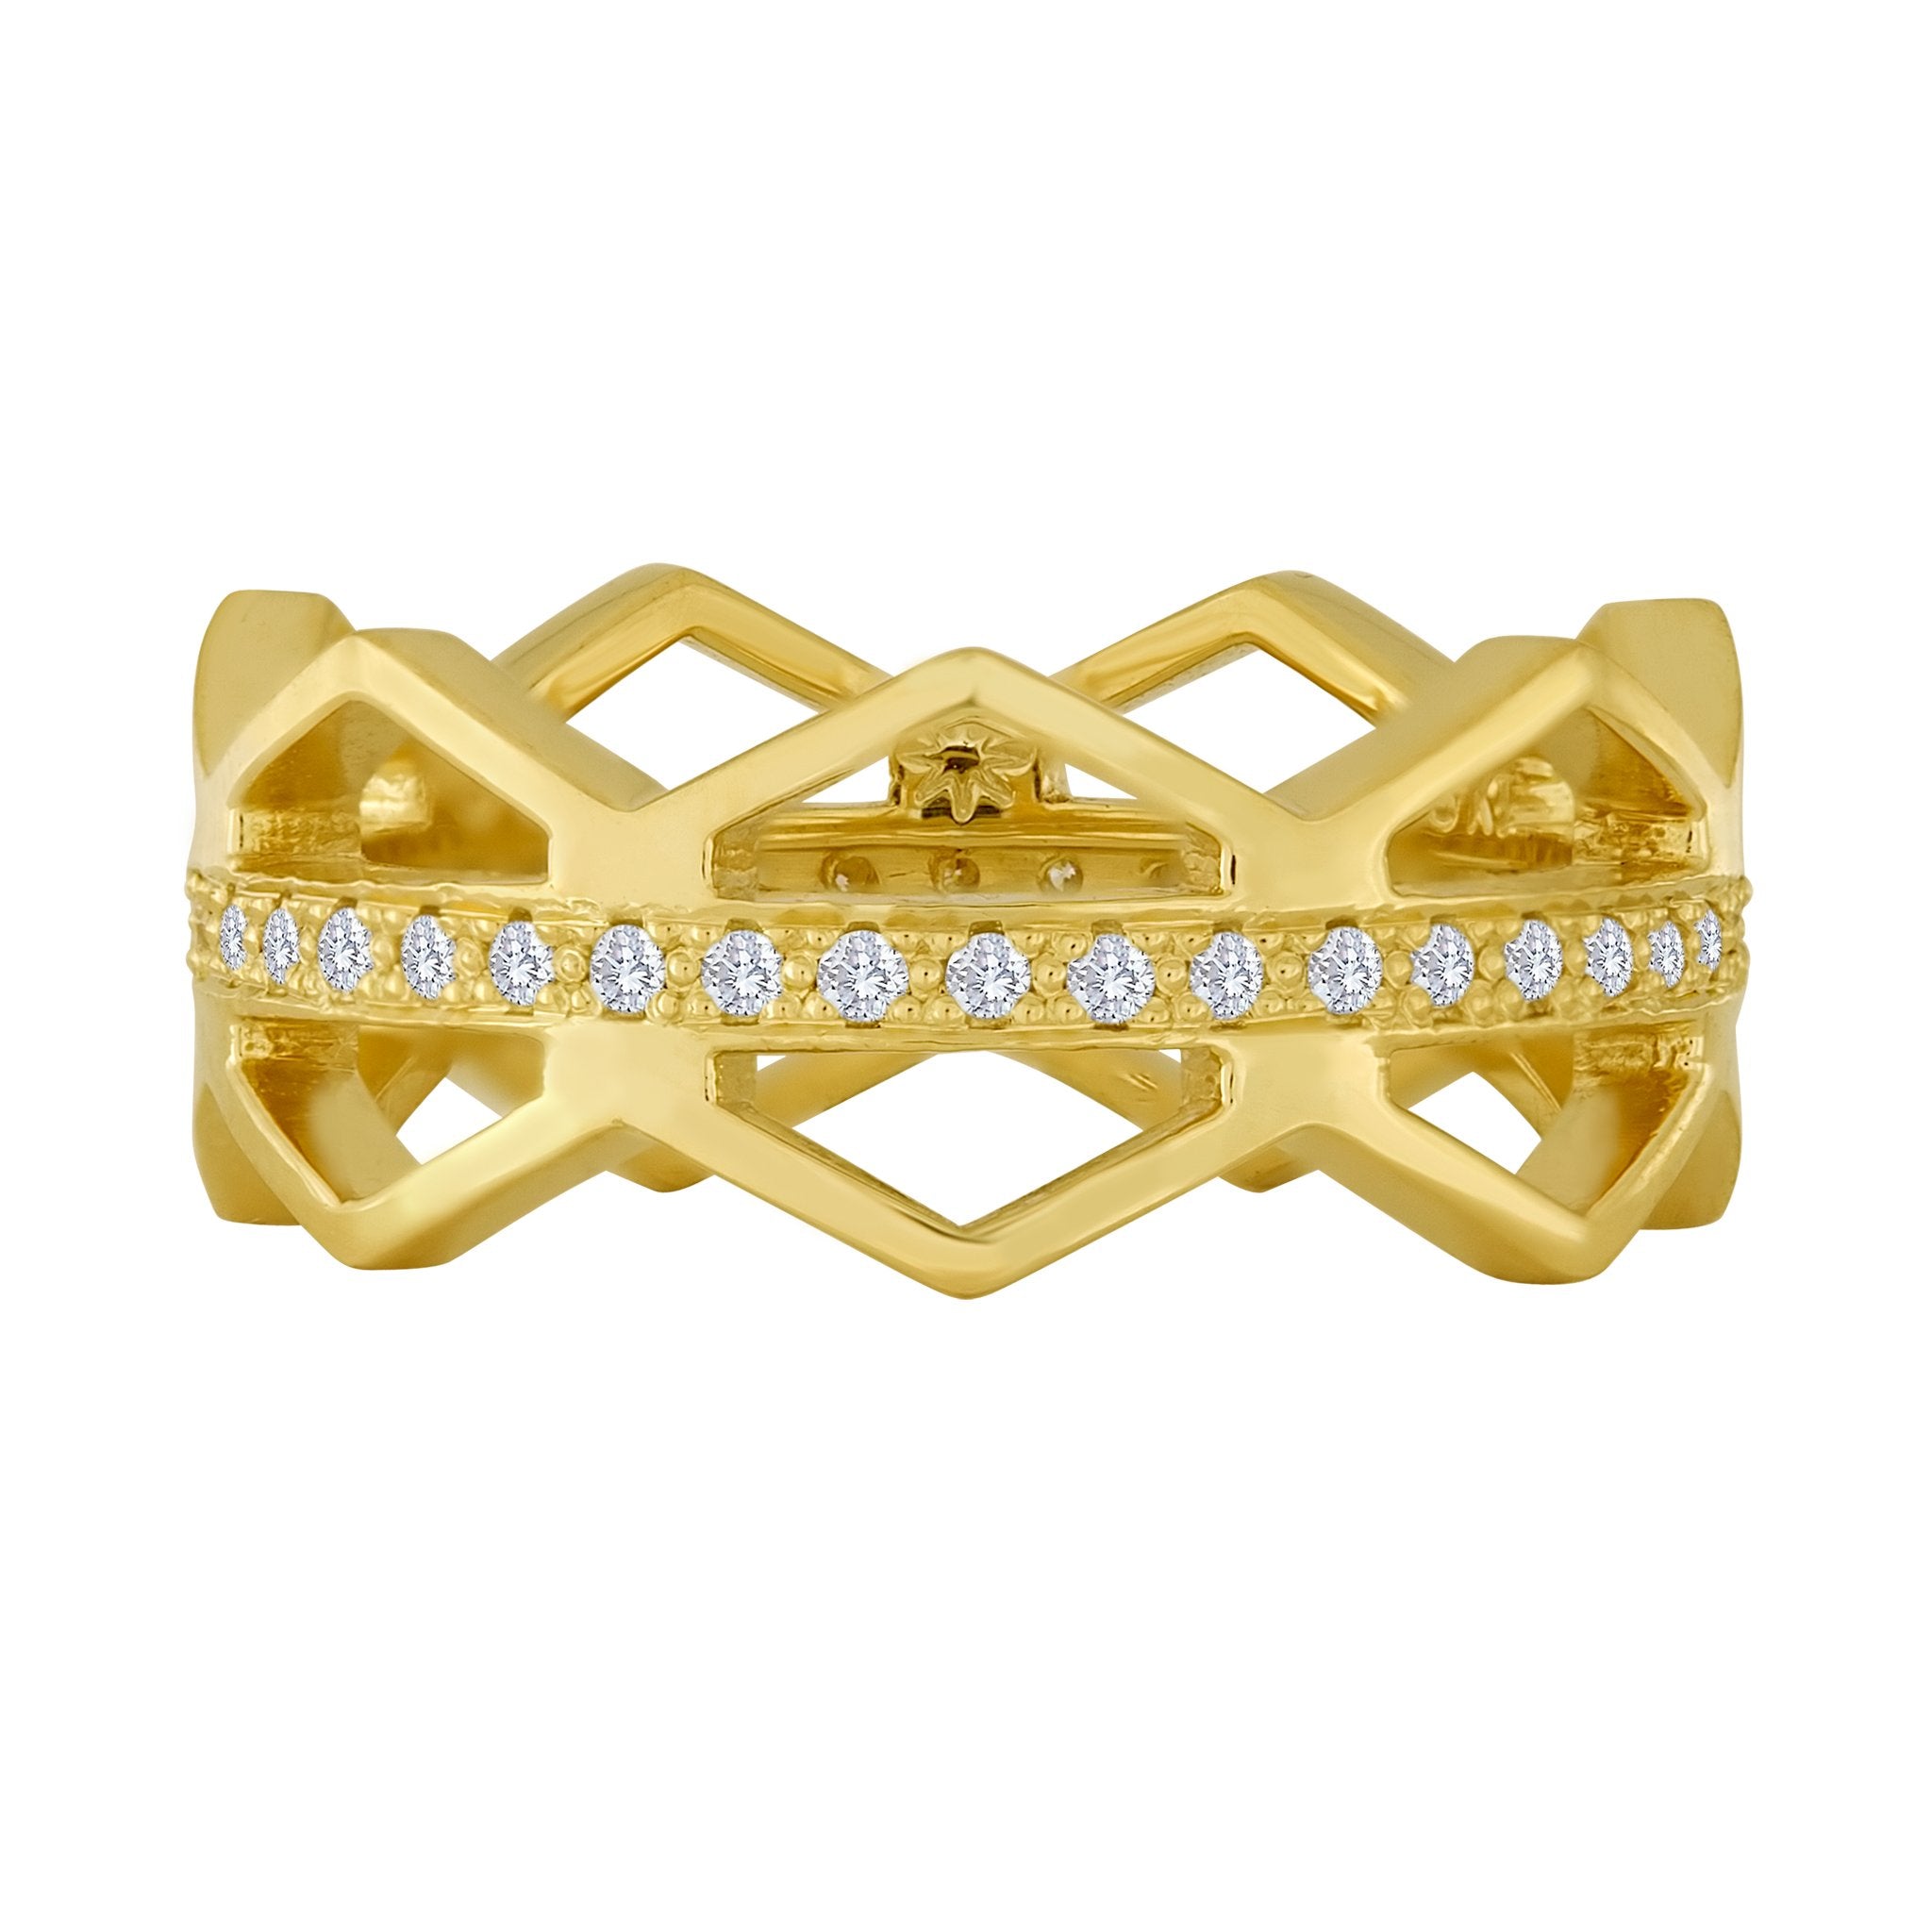 Zig Zag Band Ring: 18k Gold, Diamonds